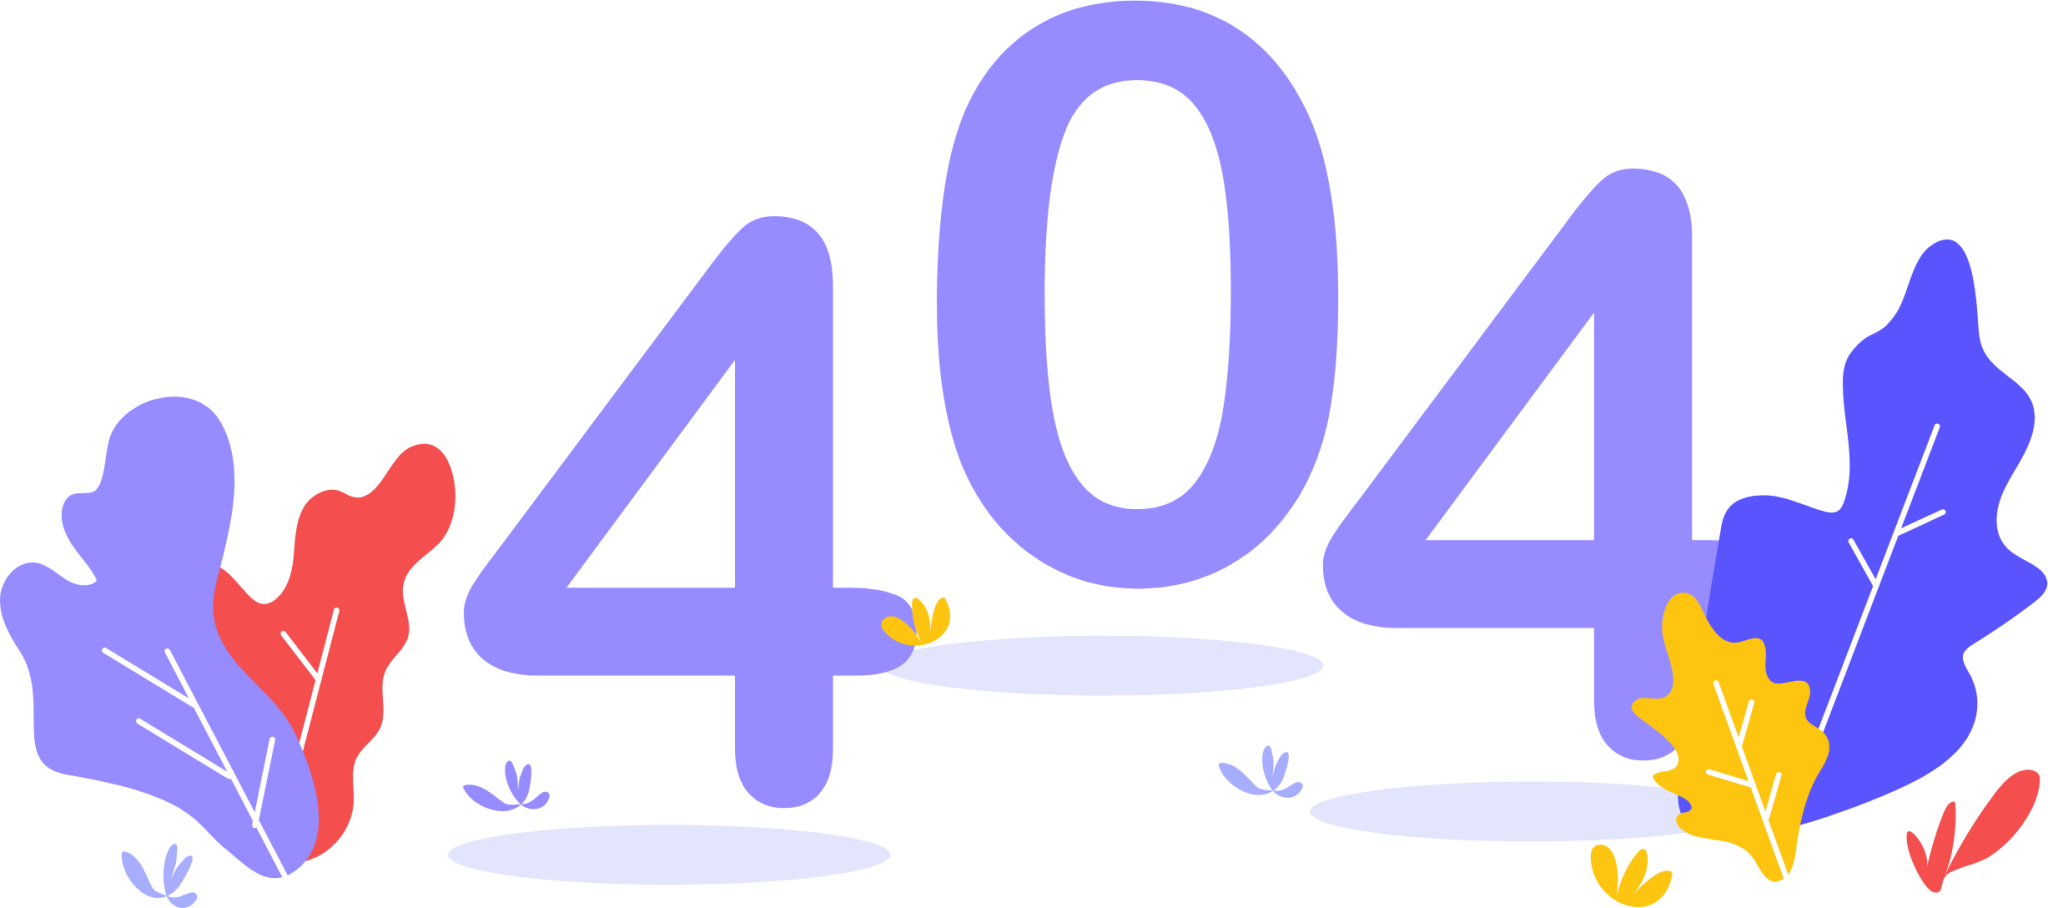 Strona błędu 404